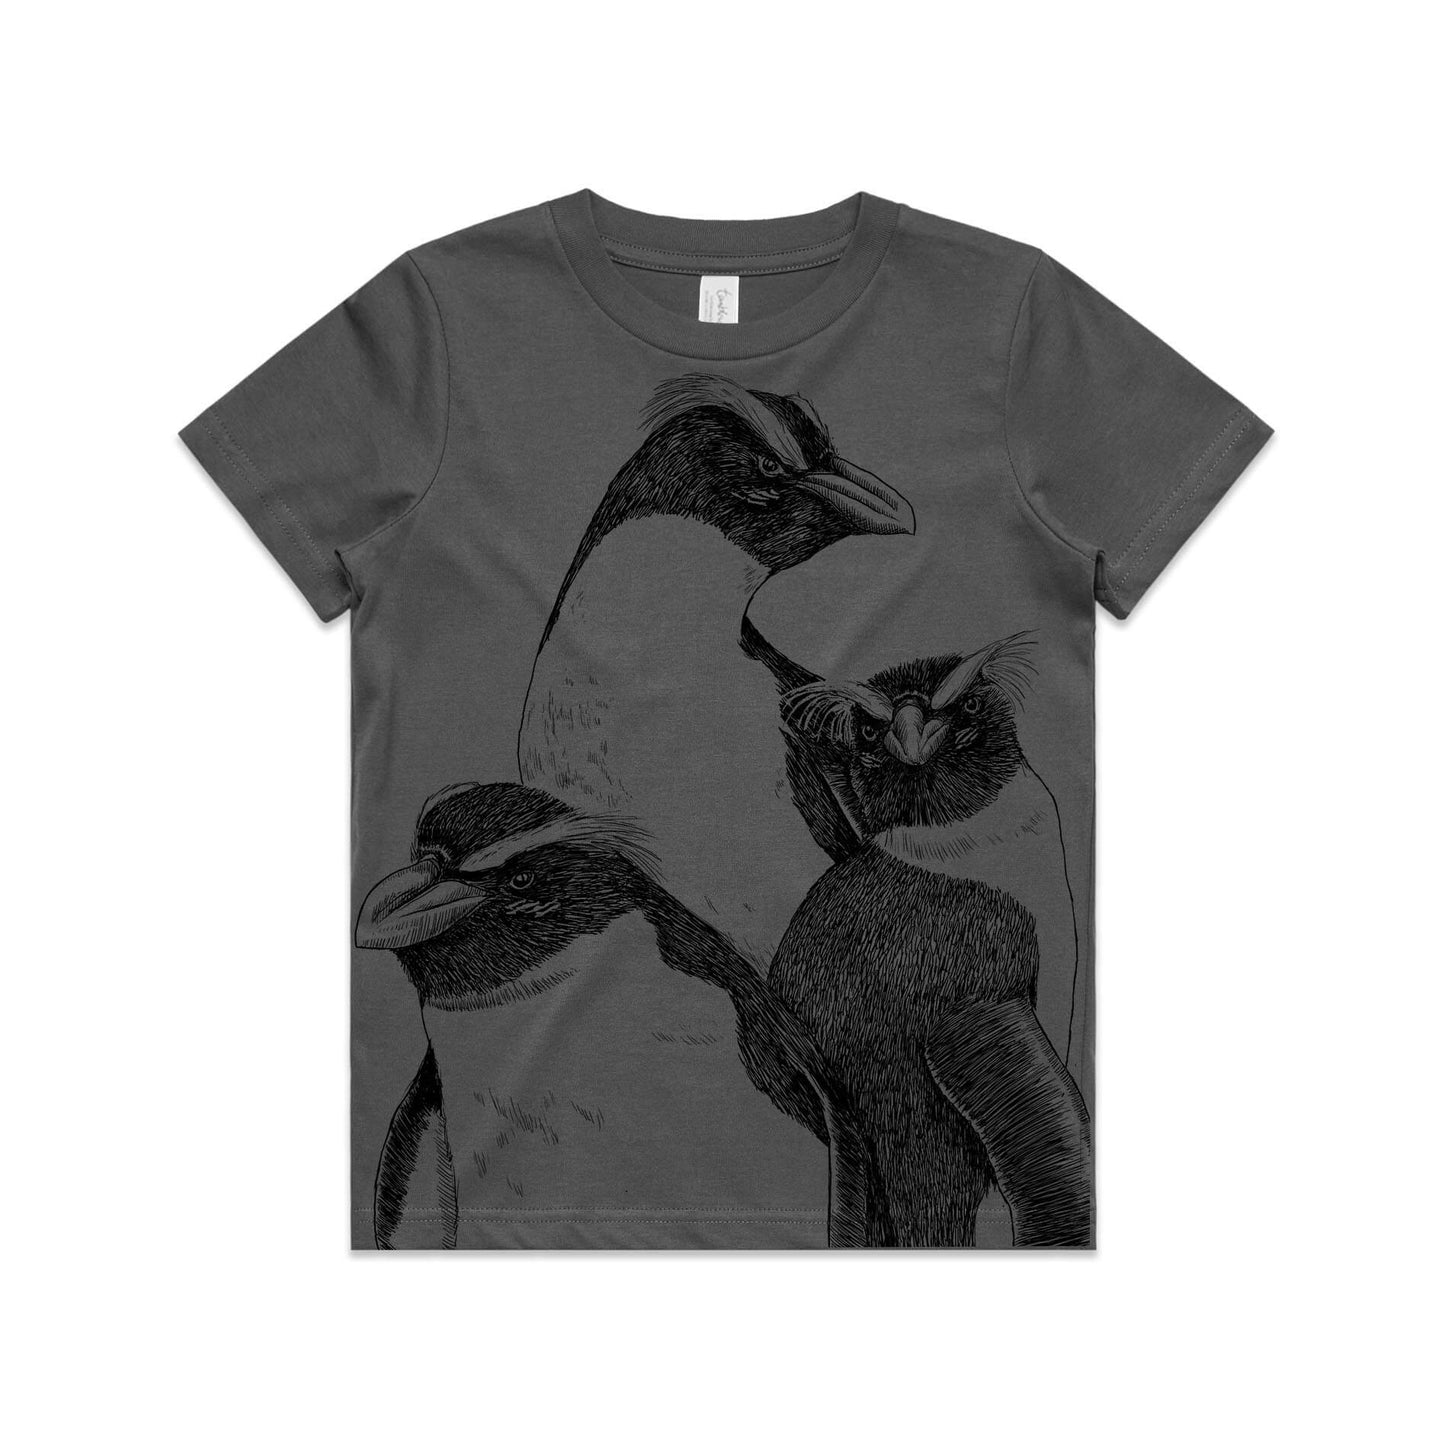 Charcoal, cotton kids' t-shirt with screen printed Kids tawaki/fiordland crested penguin design.